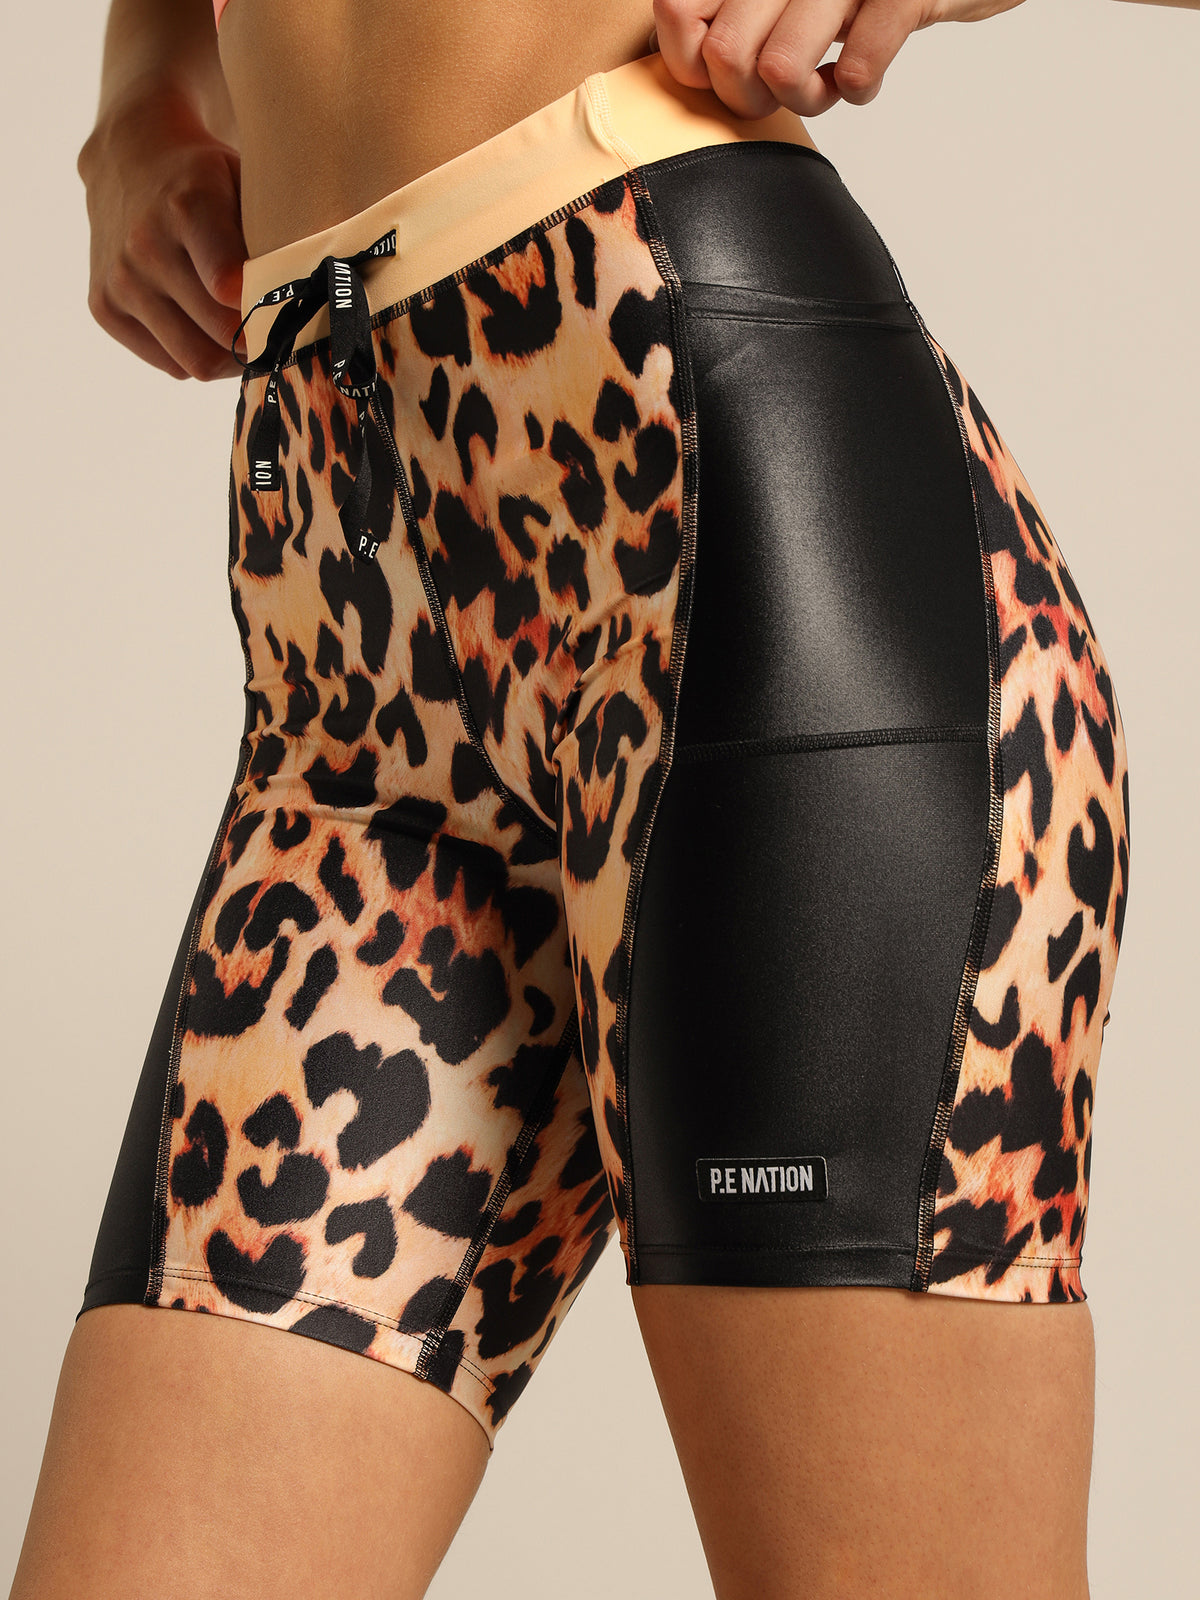 Game Changer Bike Shorts in Leopard Print